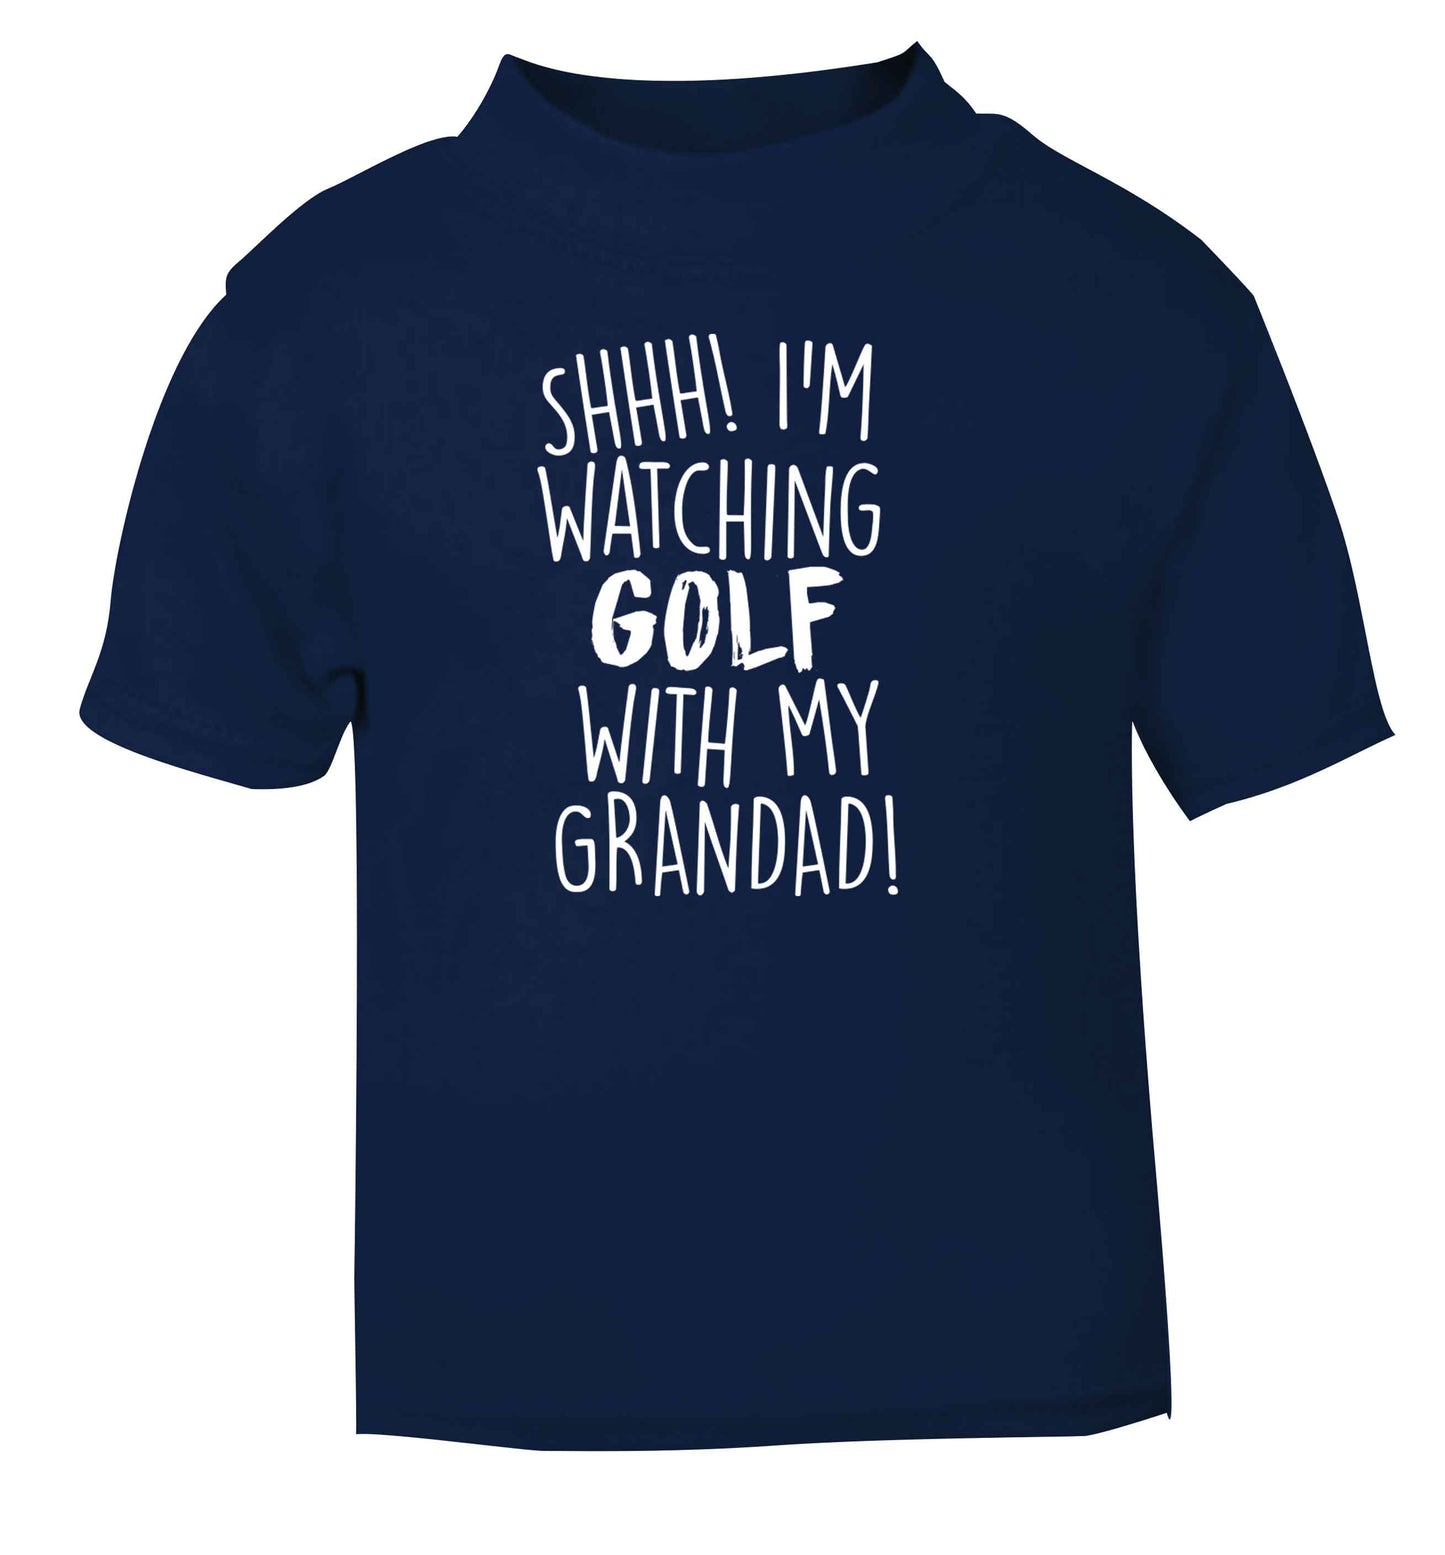 Shh I'm watching golf with my grandad navy Baby Toddler Tshirt 2 Years